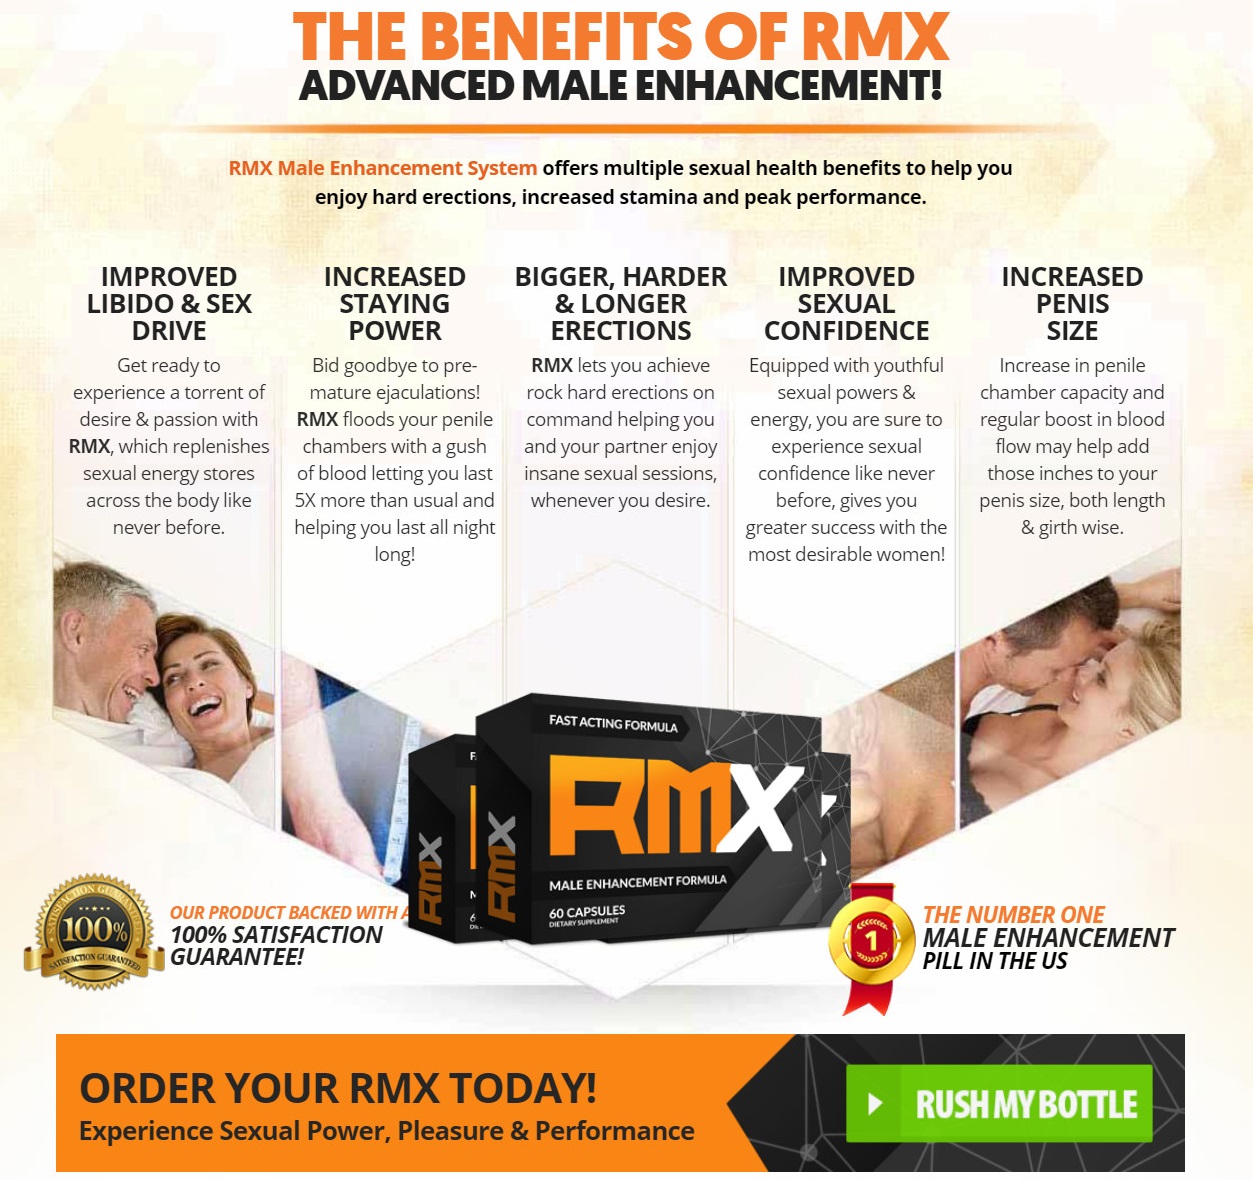 RMX Male Enhancement Benefits